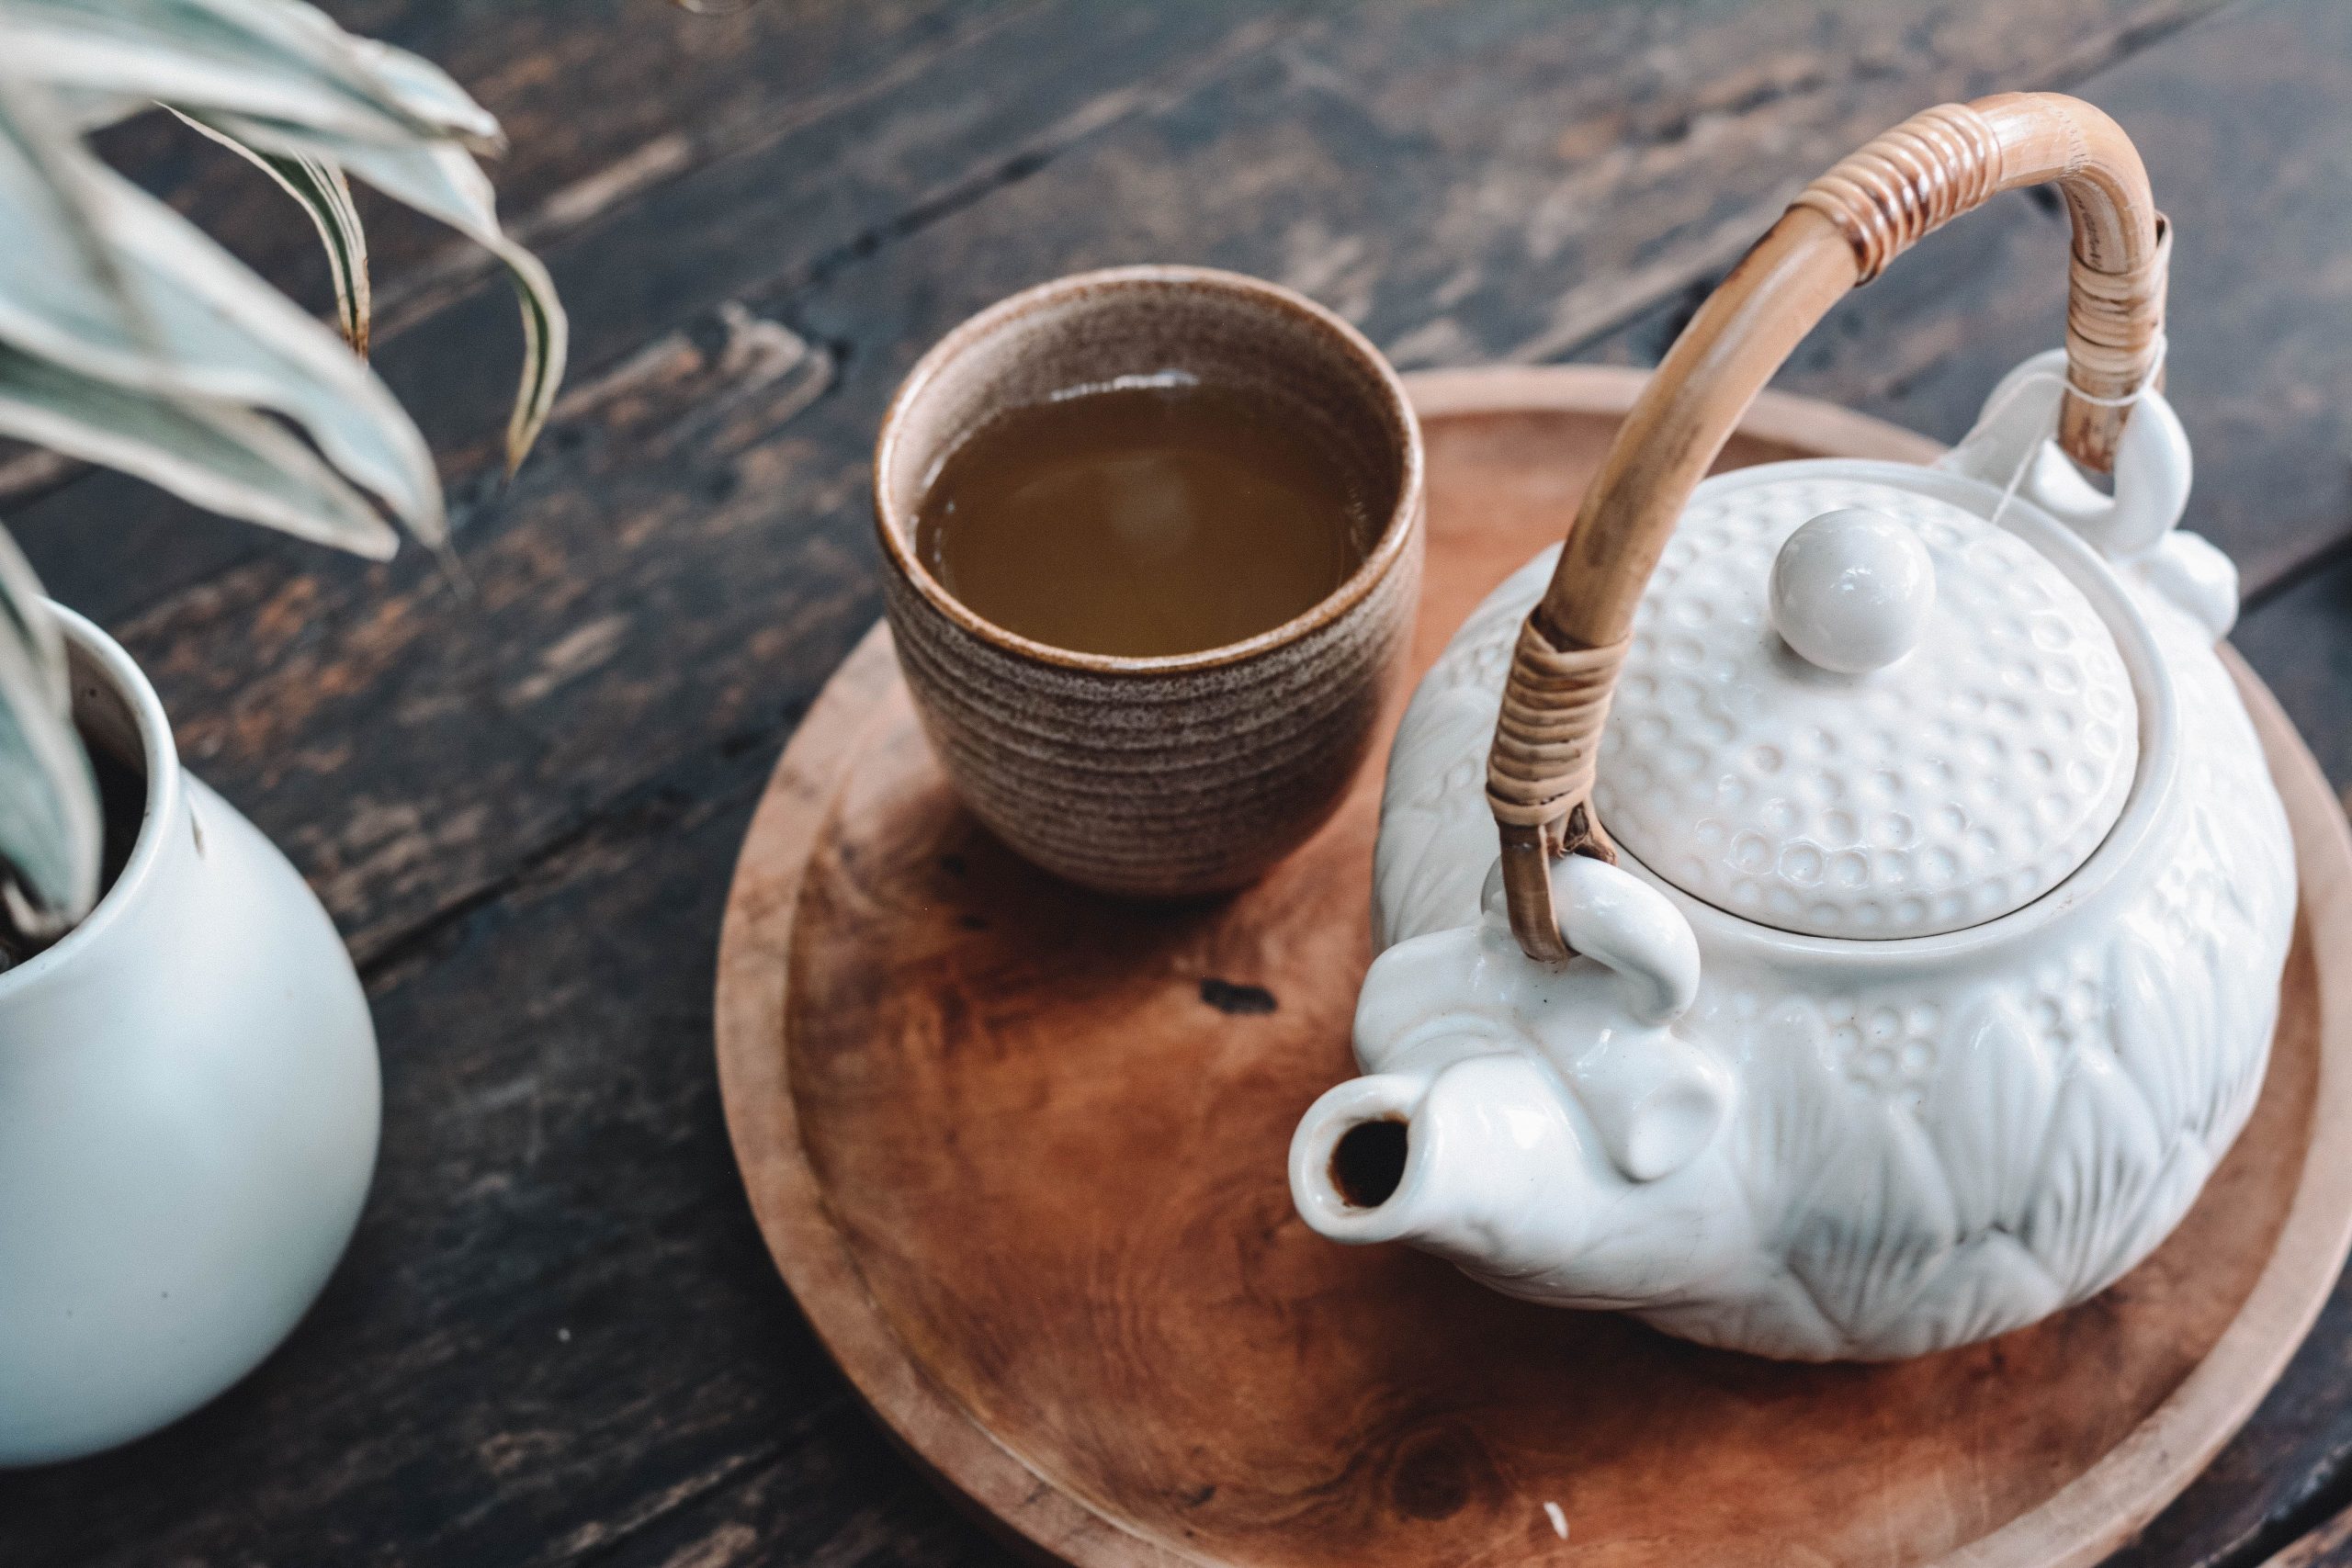 Rich taste: Rare Chinese tea costs over $184,000 per kilogram